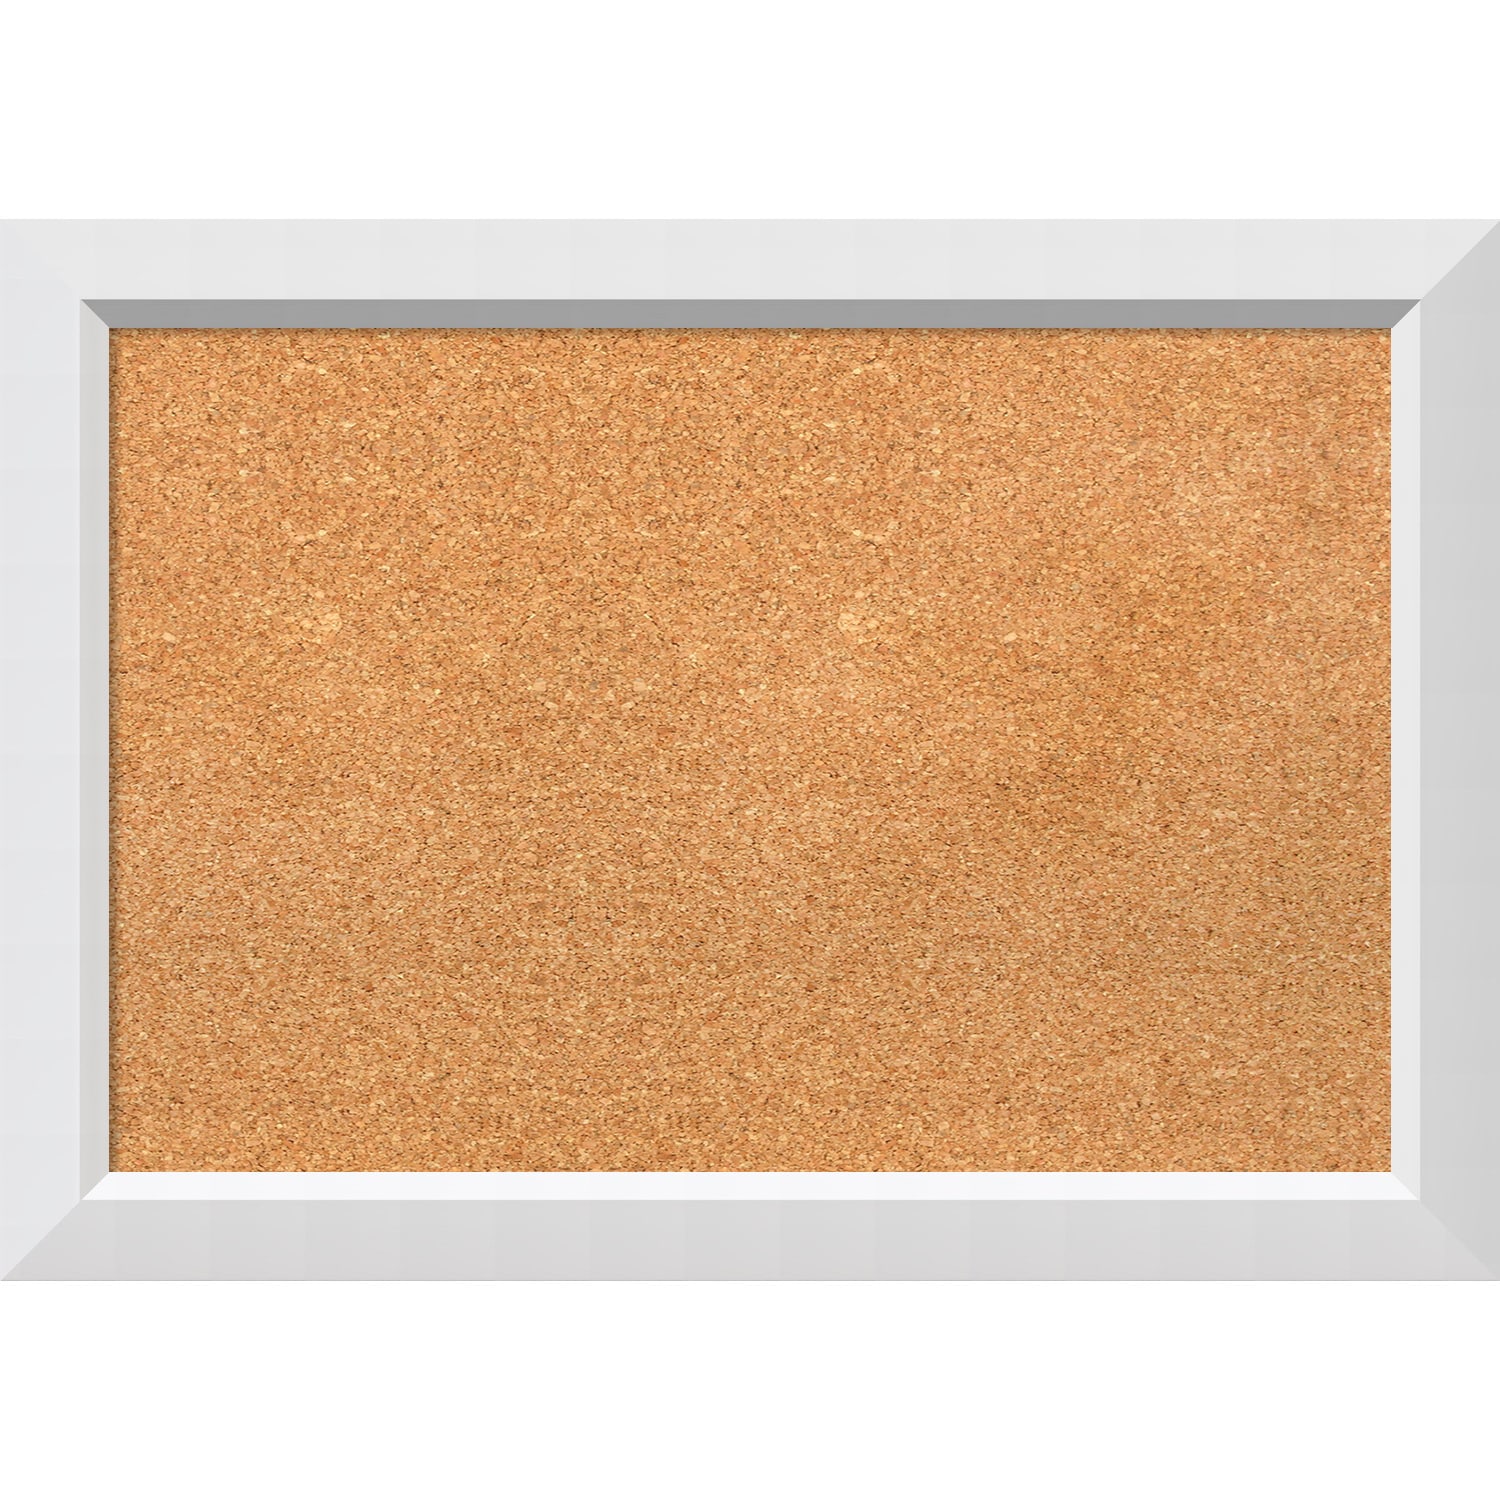 Juvale 4-Pack Cork Bulletin Board, 1/4 Inch Natural Cork Tile